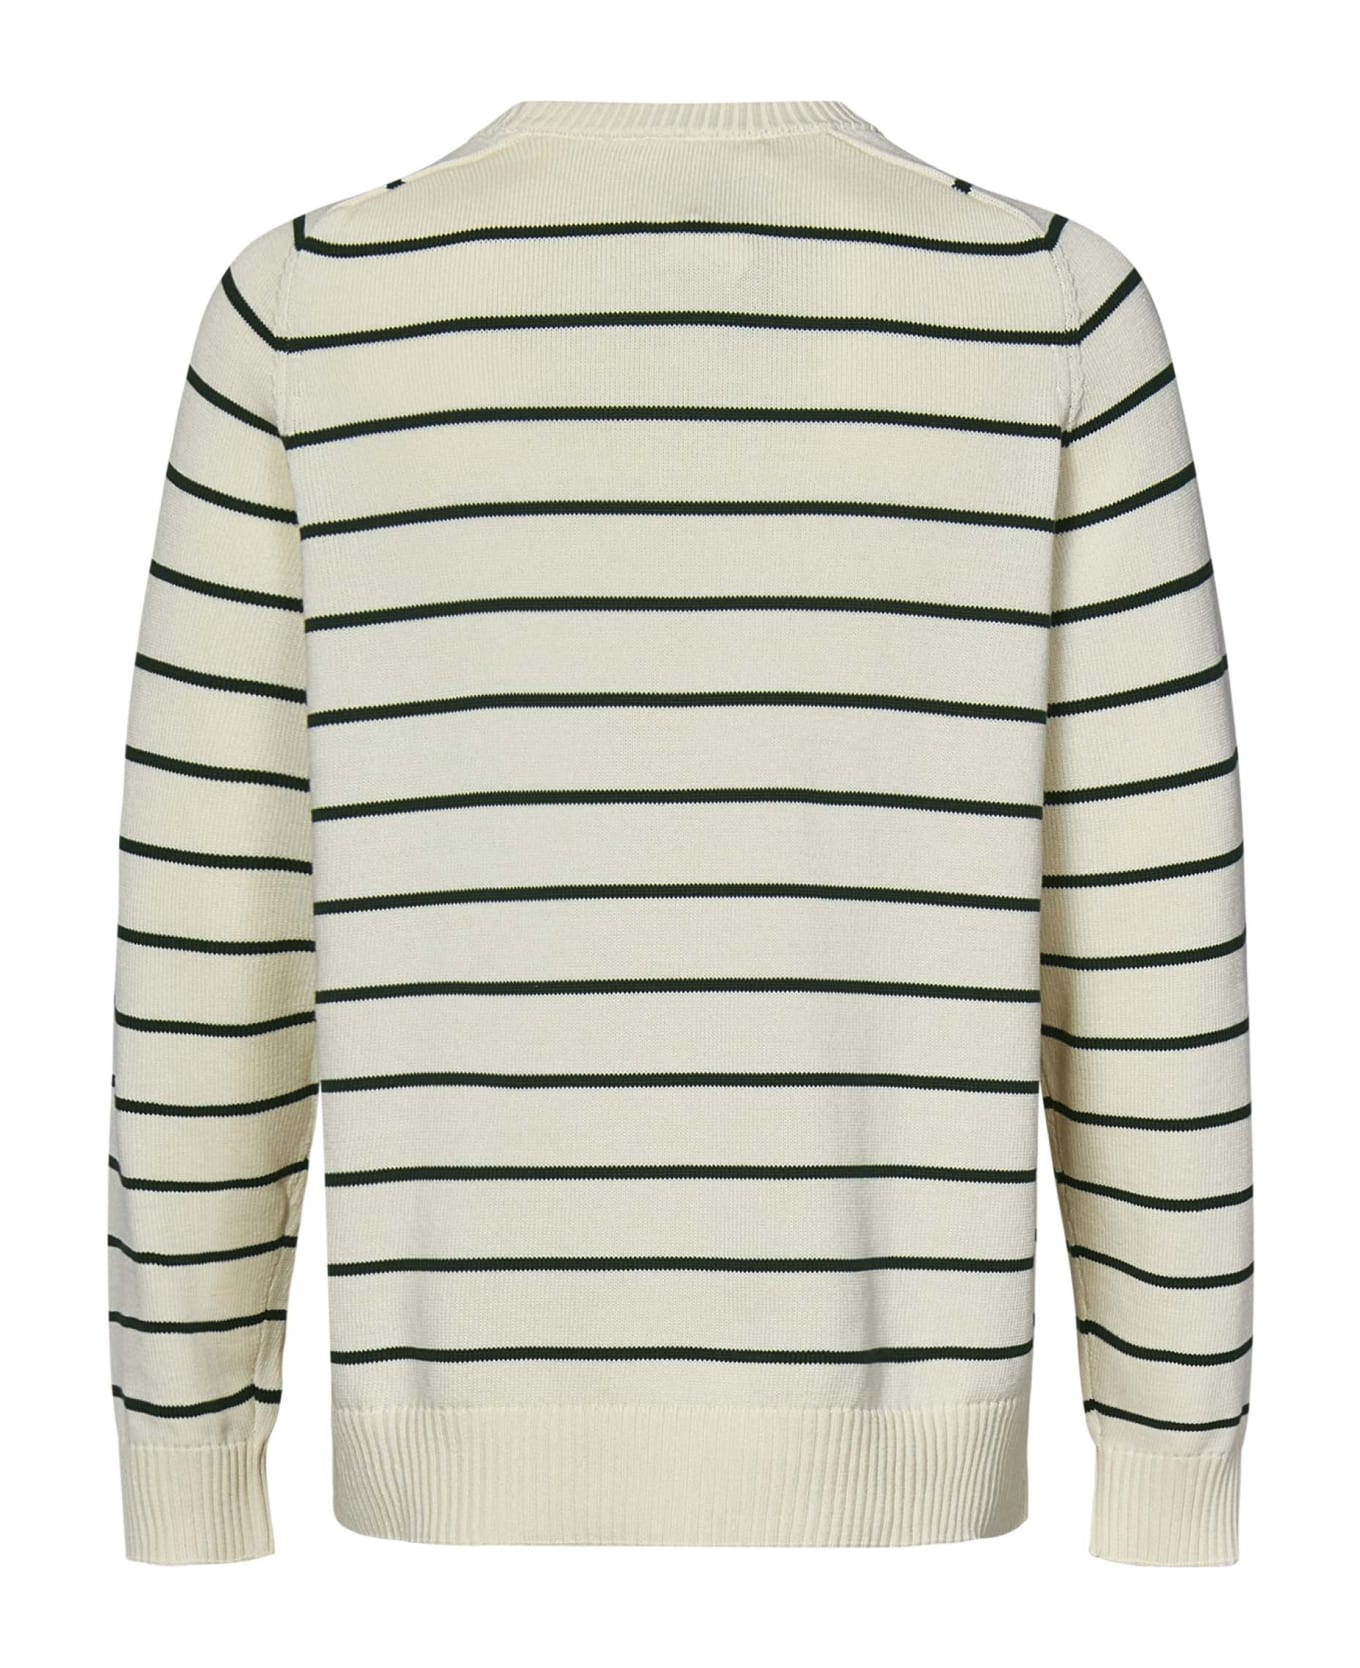 Lacoste Sweater - White